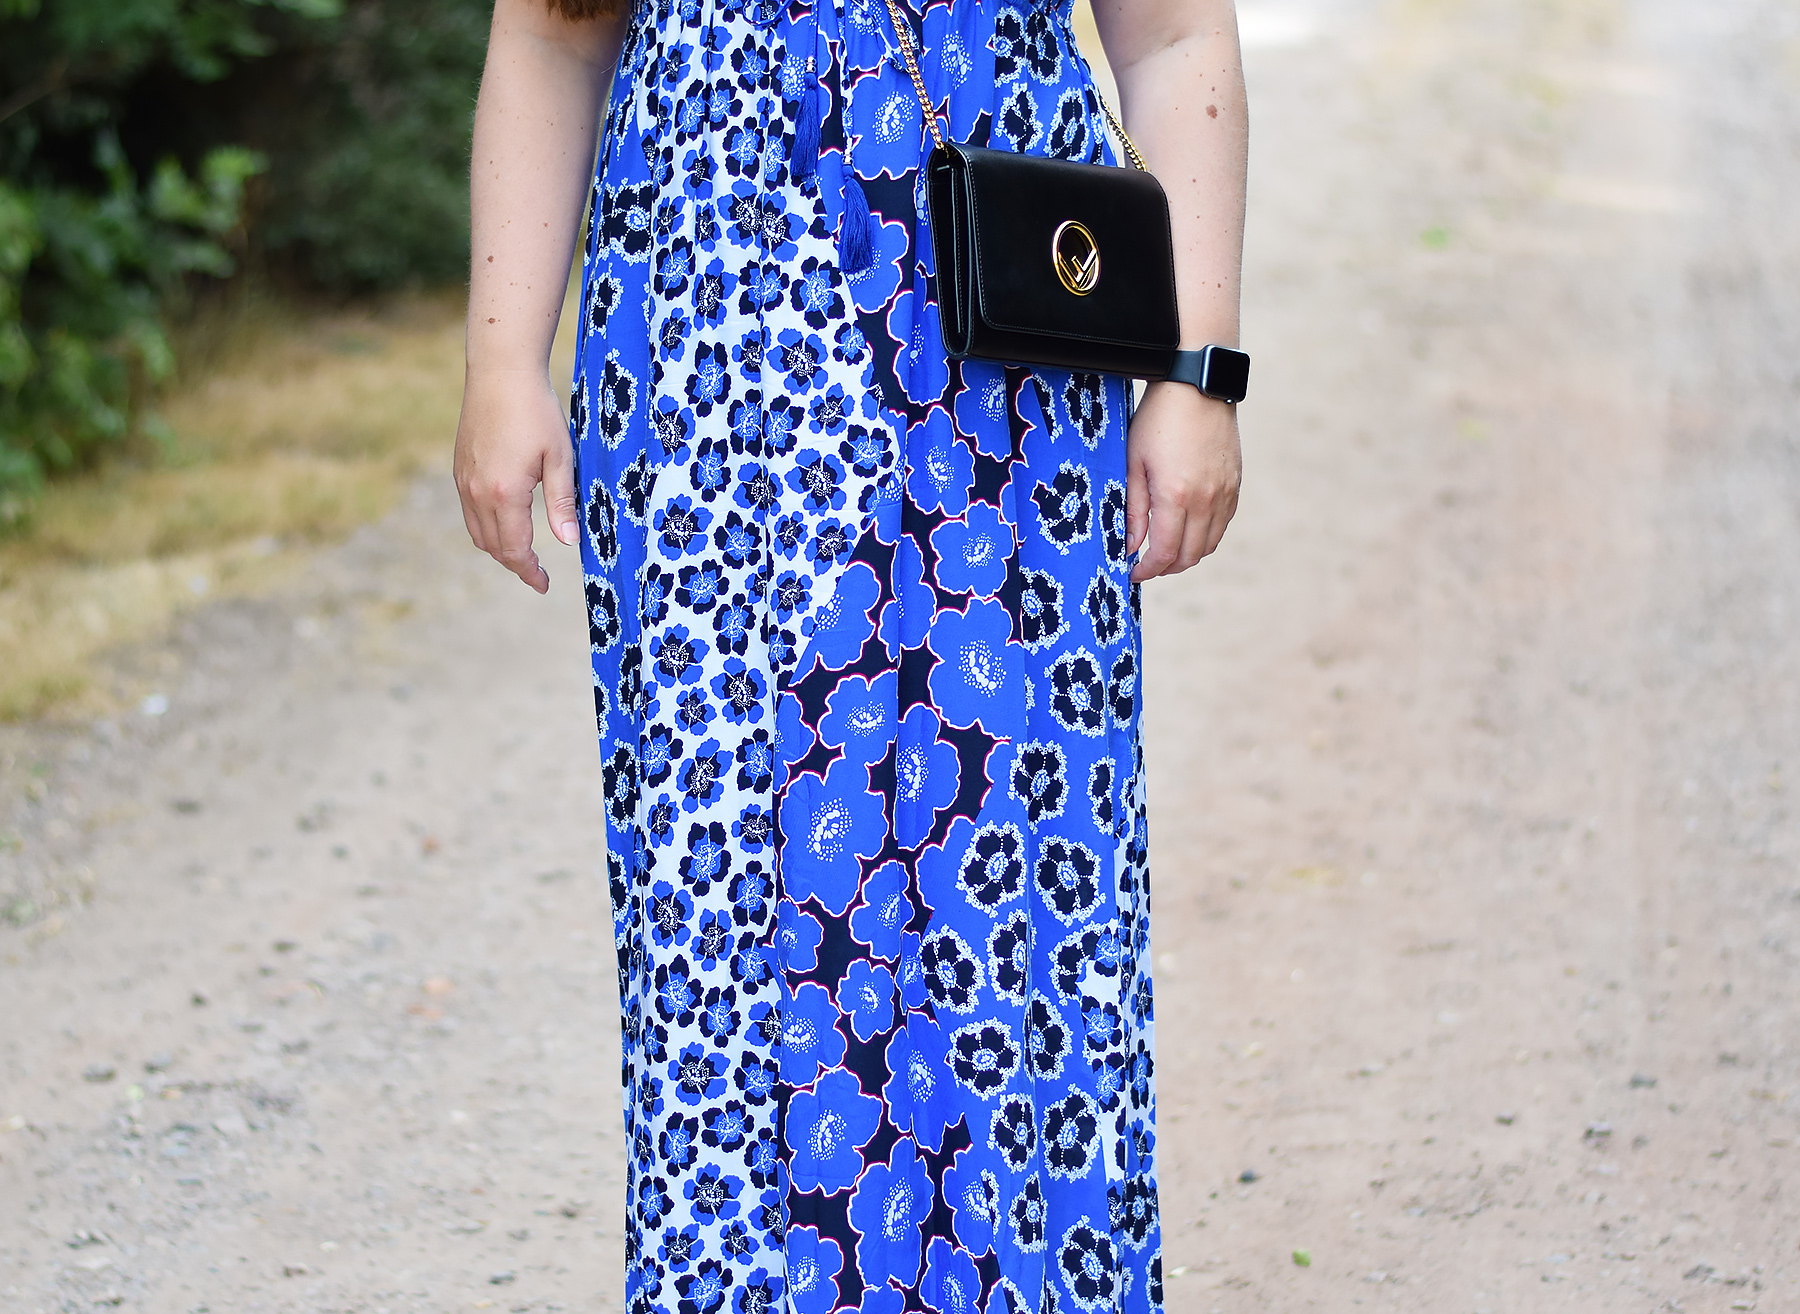 Fendi crossbody bag with blue floral maxi dress